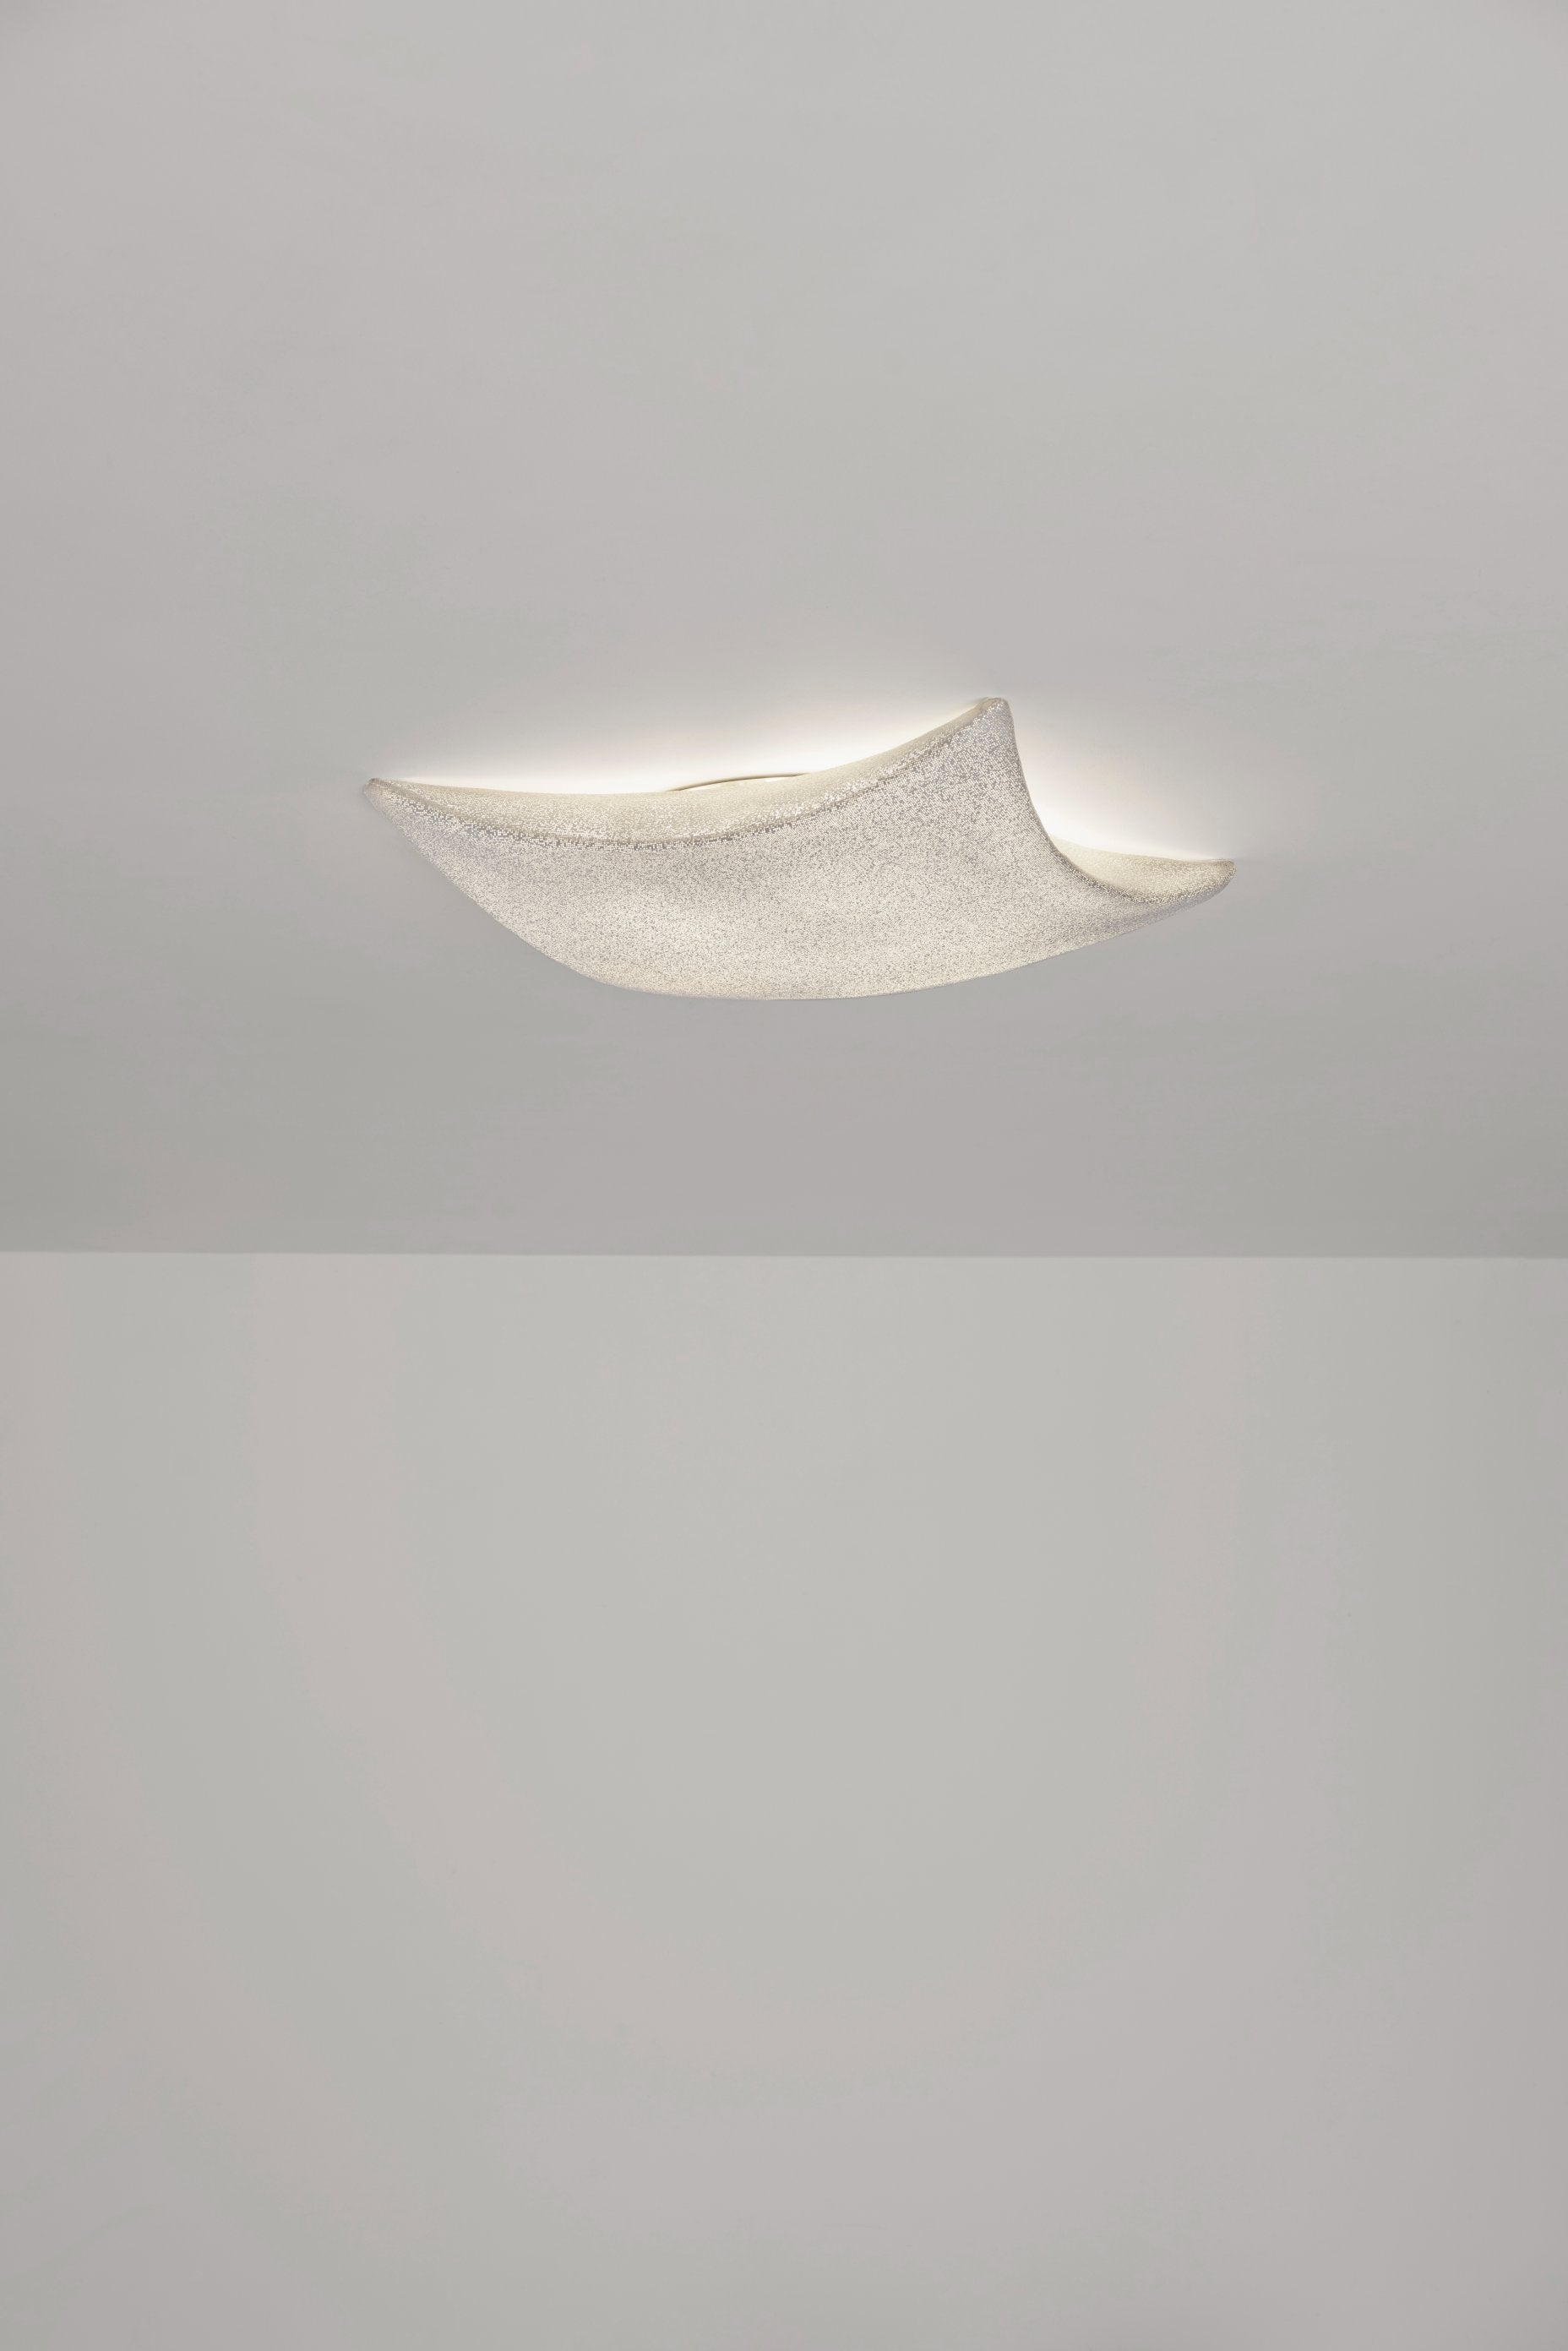 KITE - Ceiling / Wall Light